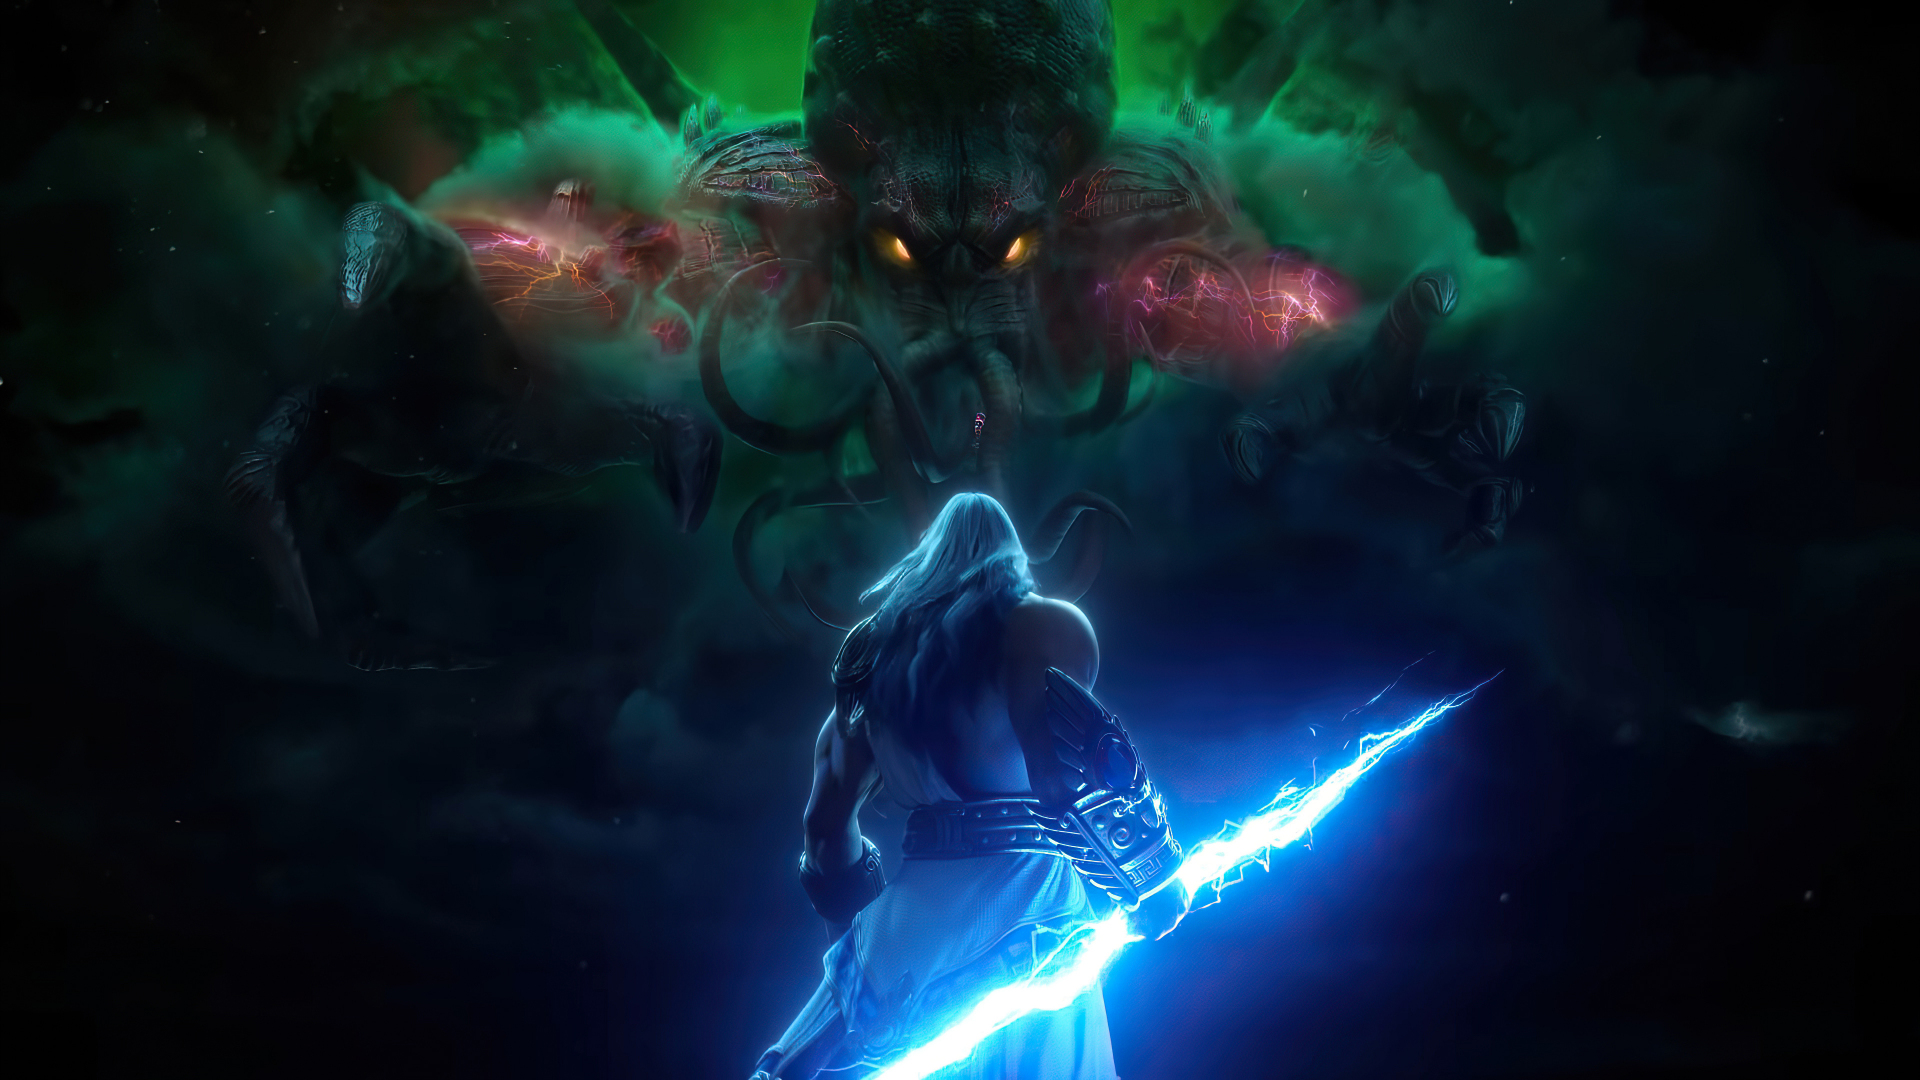 Kratos And Zeus wallpaper by luigyh - Download on ZEDGE™ | 9046